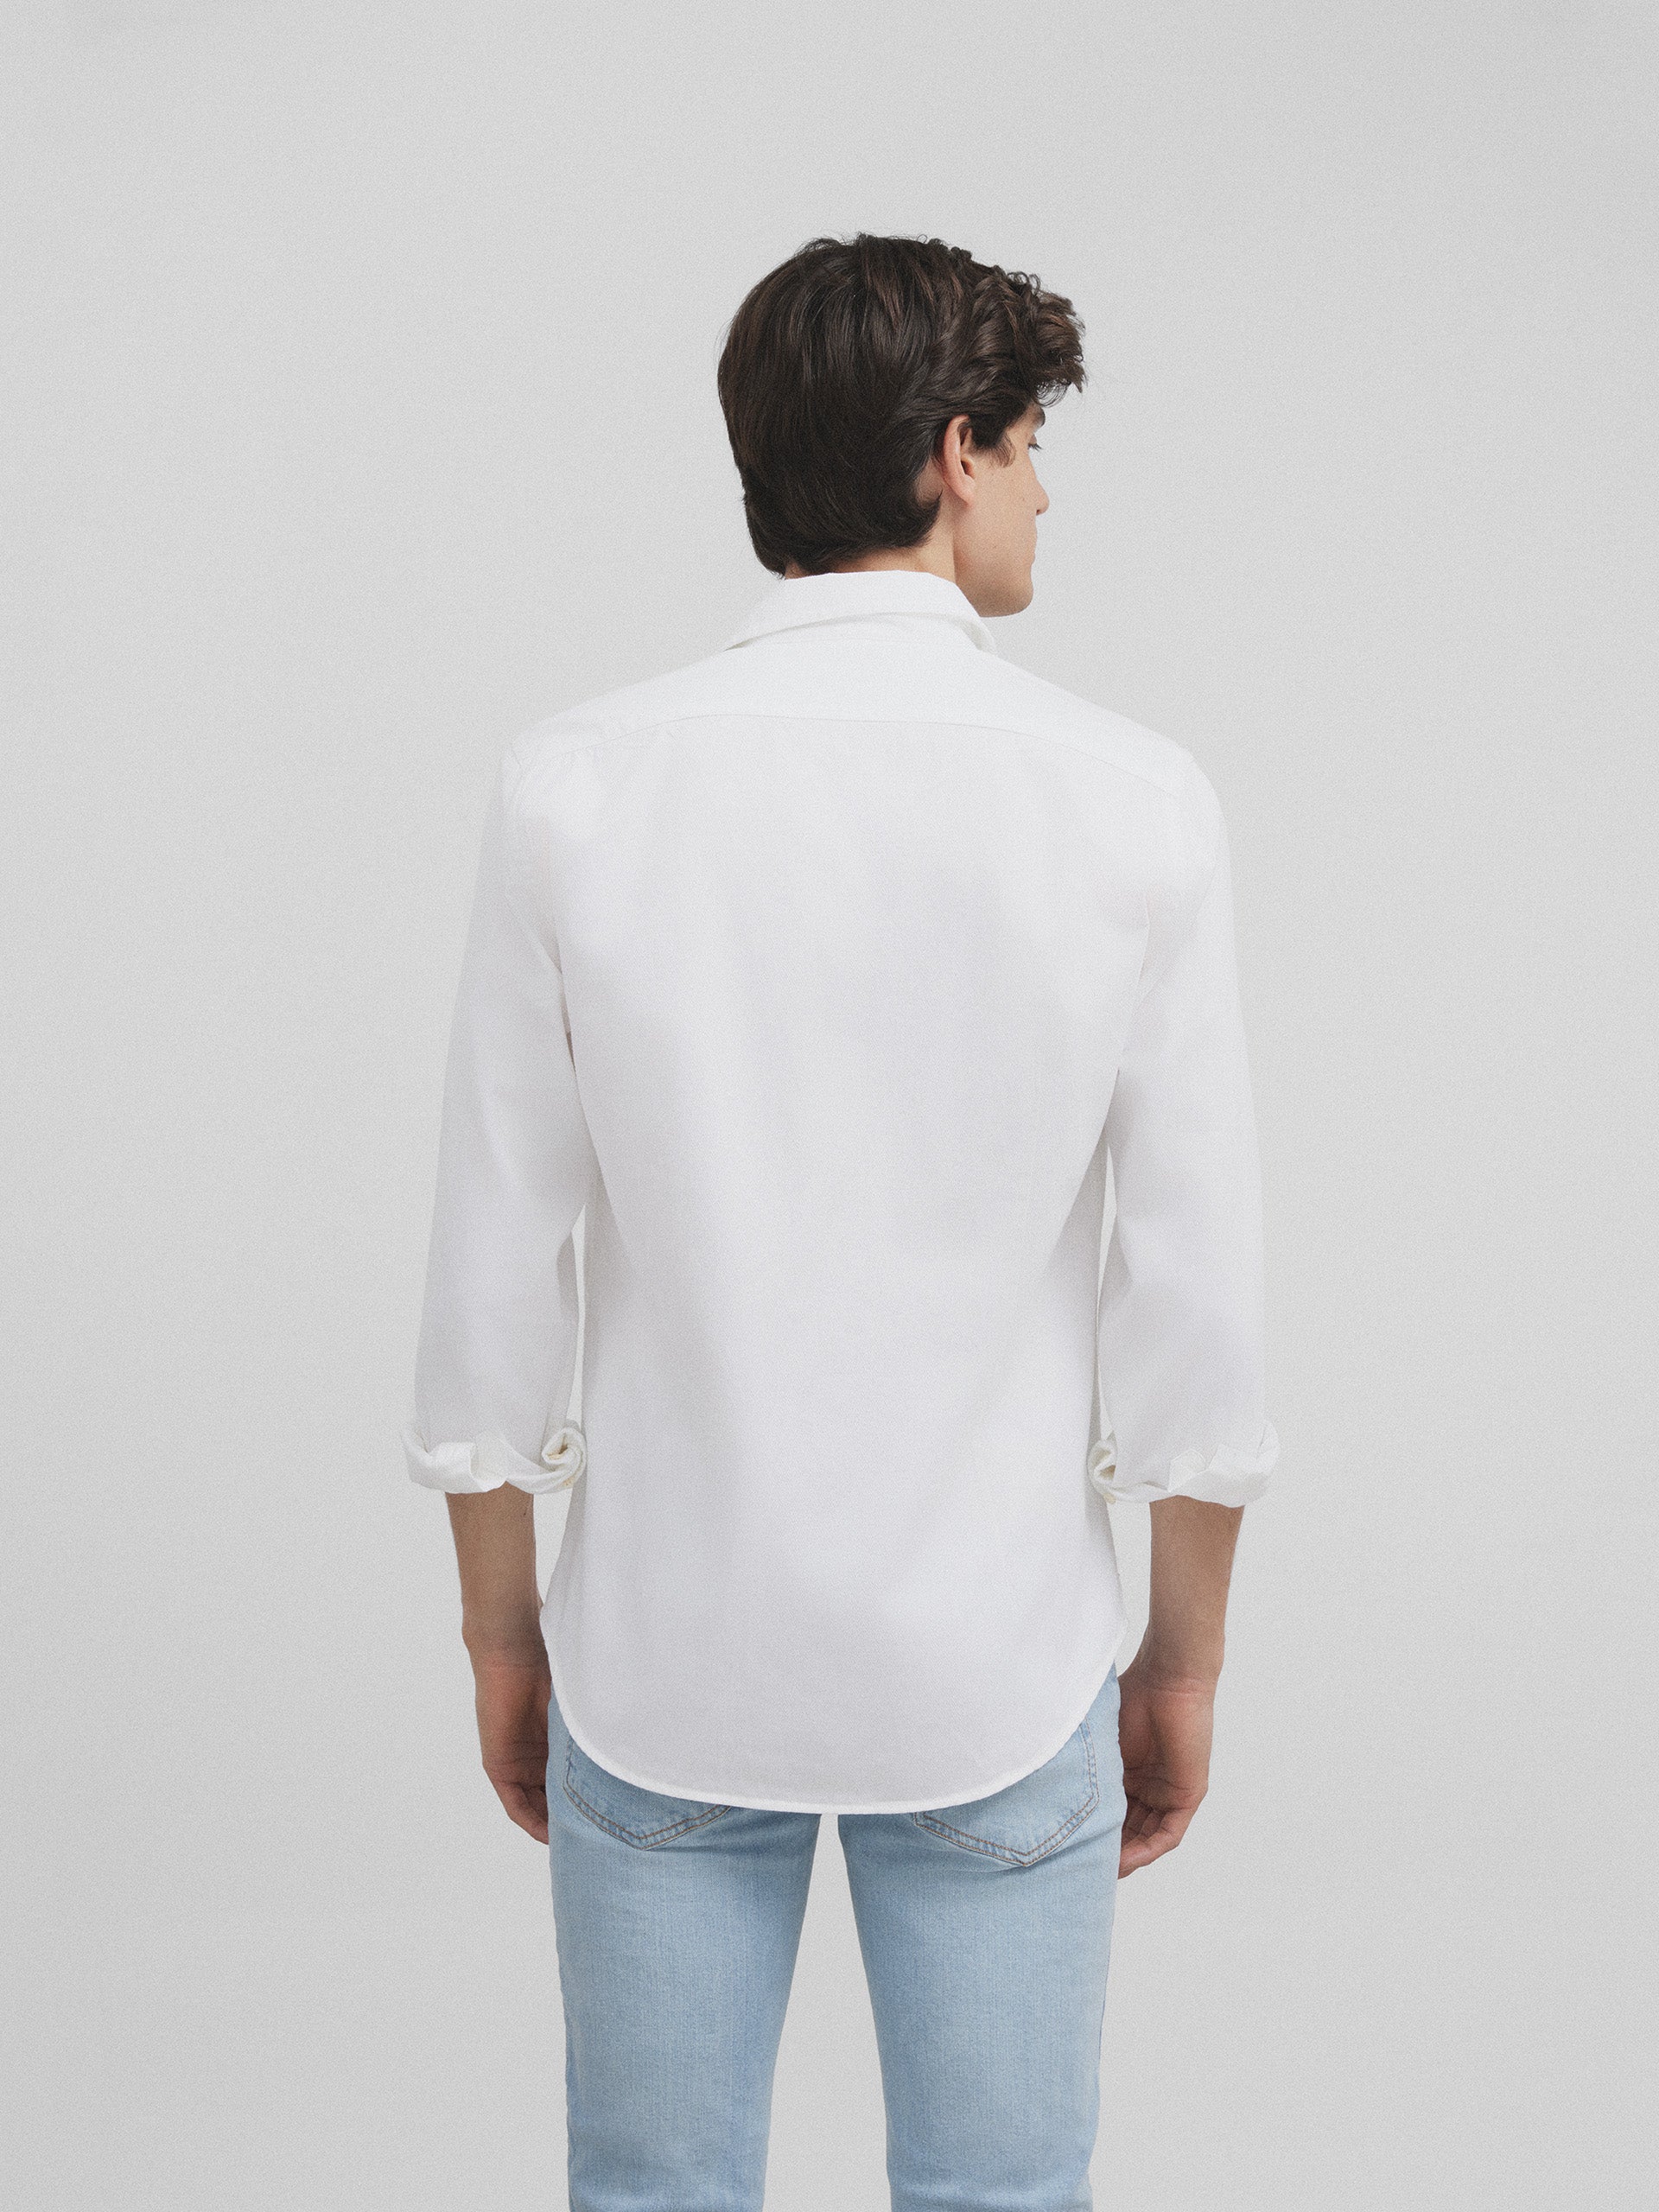 Silbon structure white sport shirt